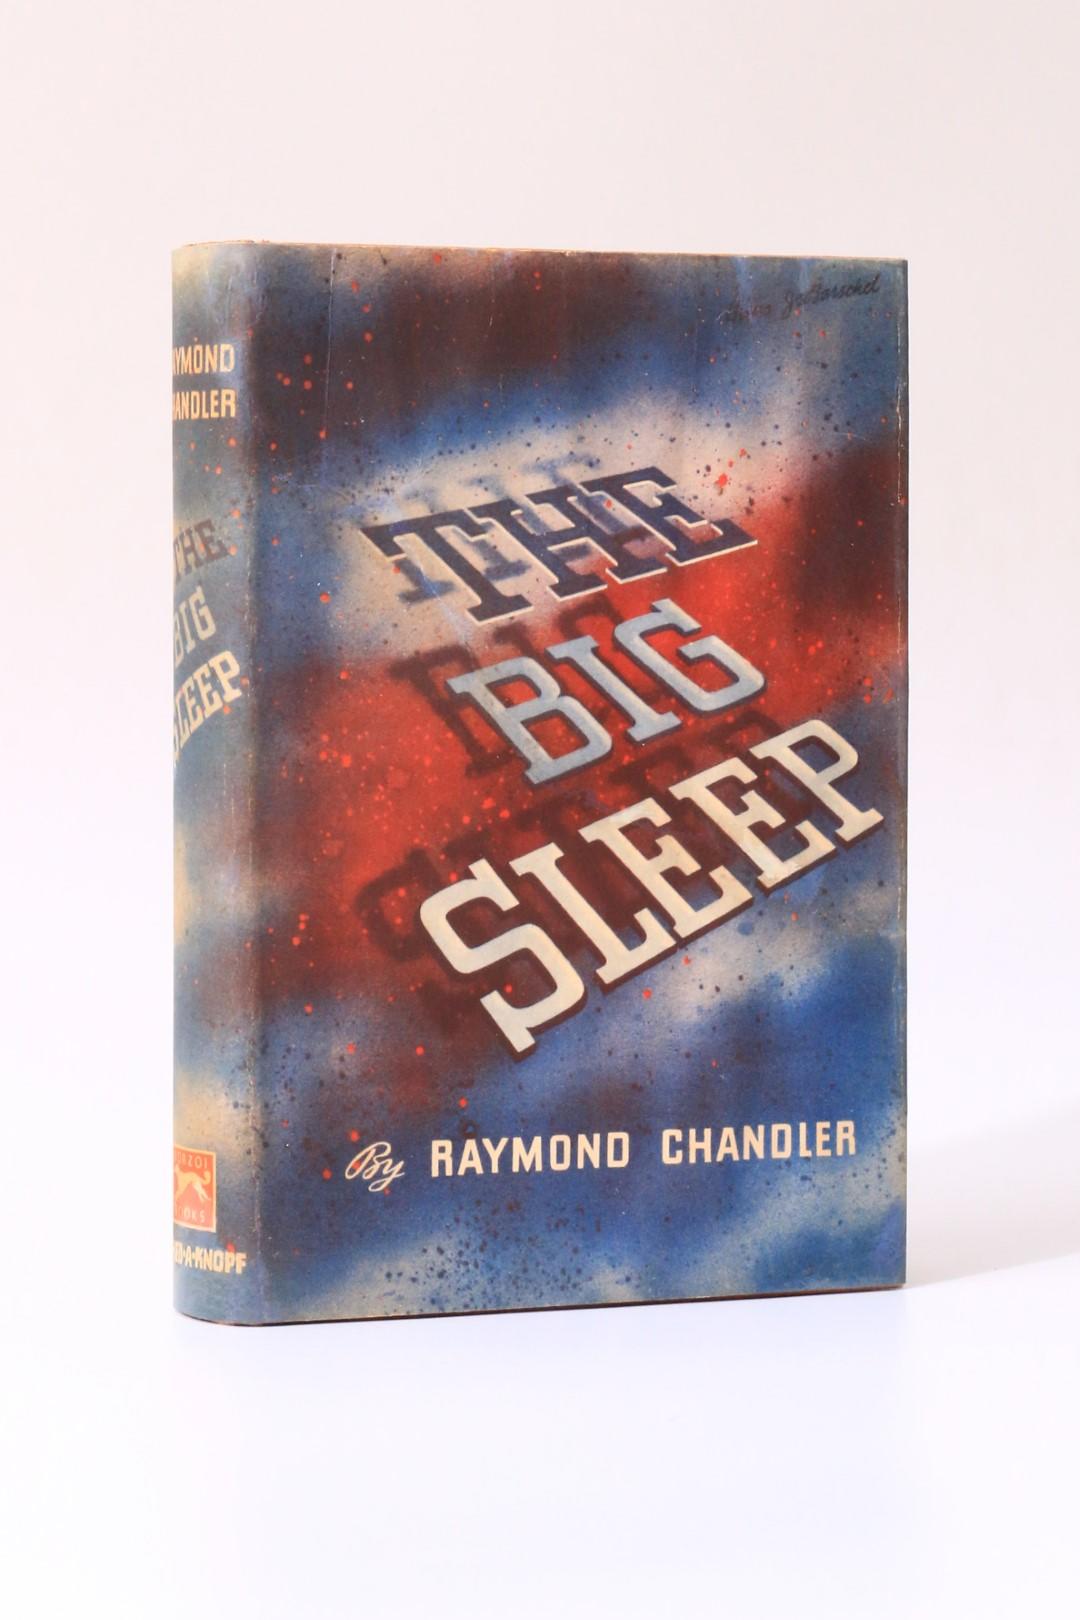 Raymond Chandler - The Big Sleep - Knopf, 1939, First Edition.